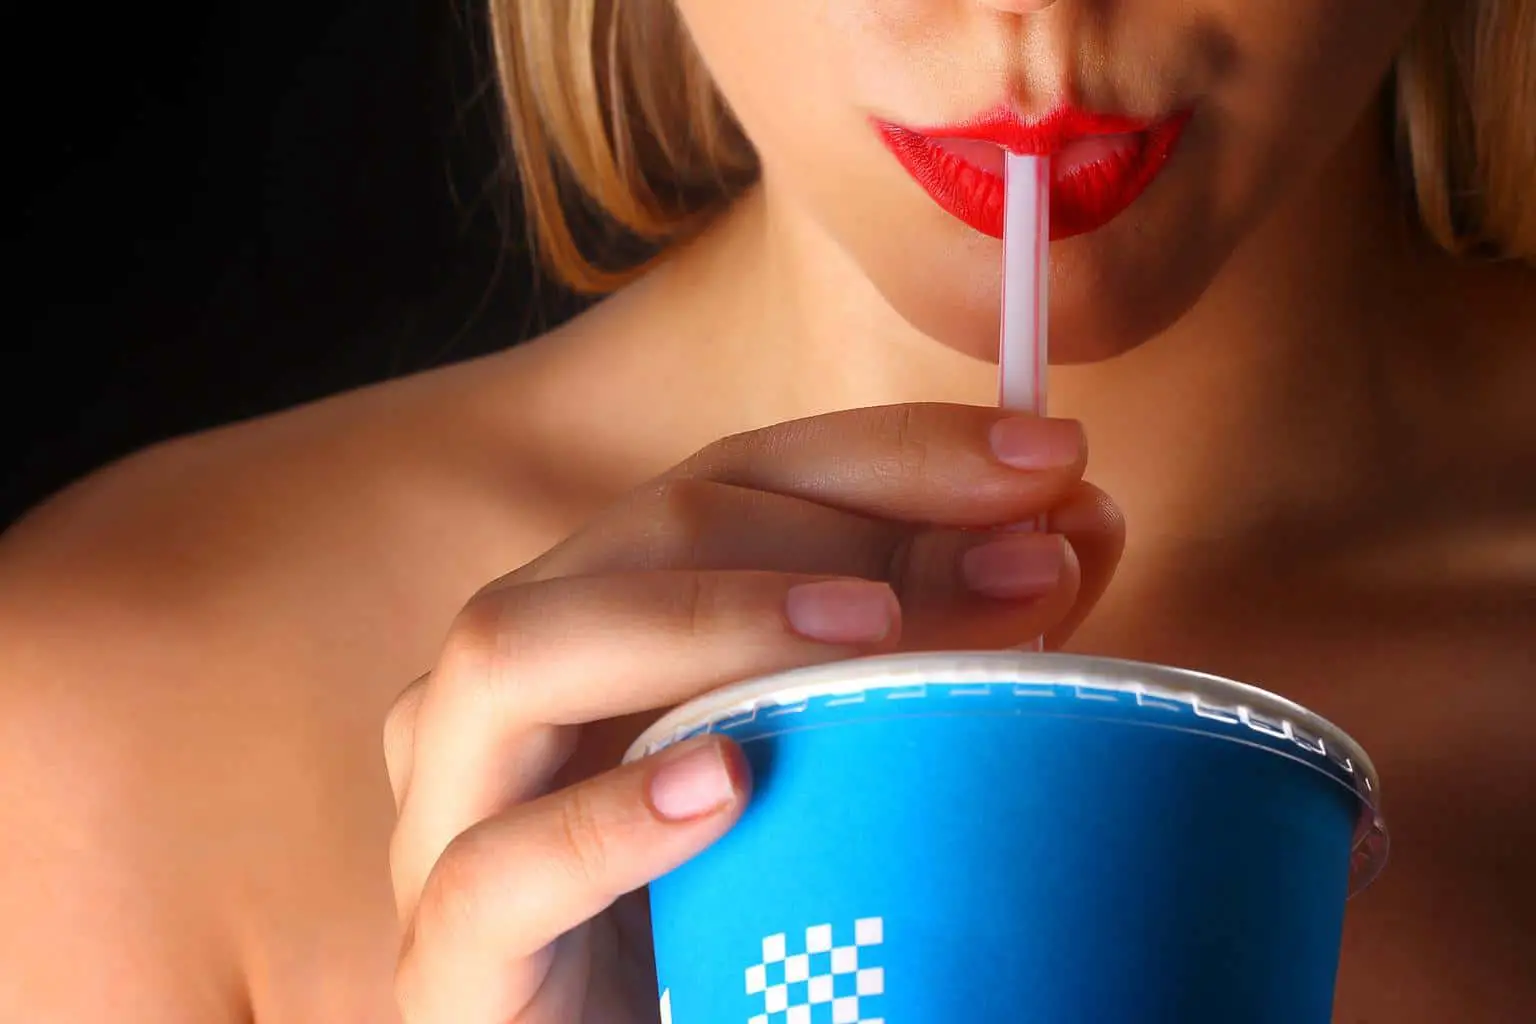 plastic-straw-woman-red-lips